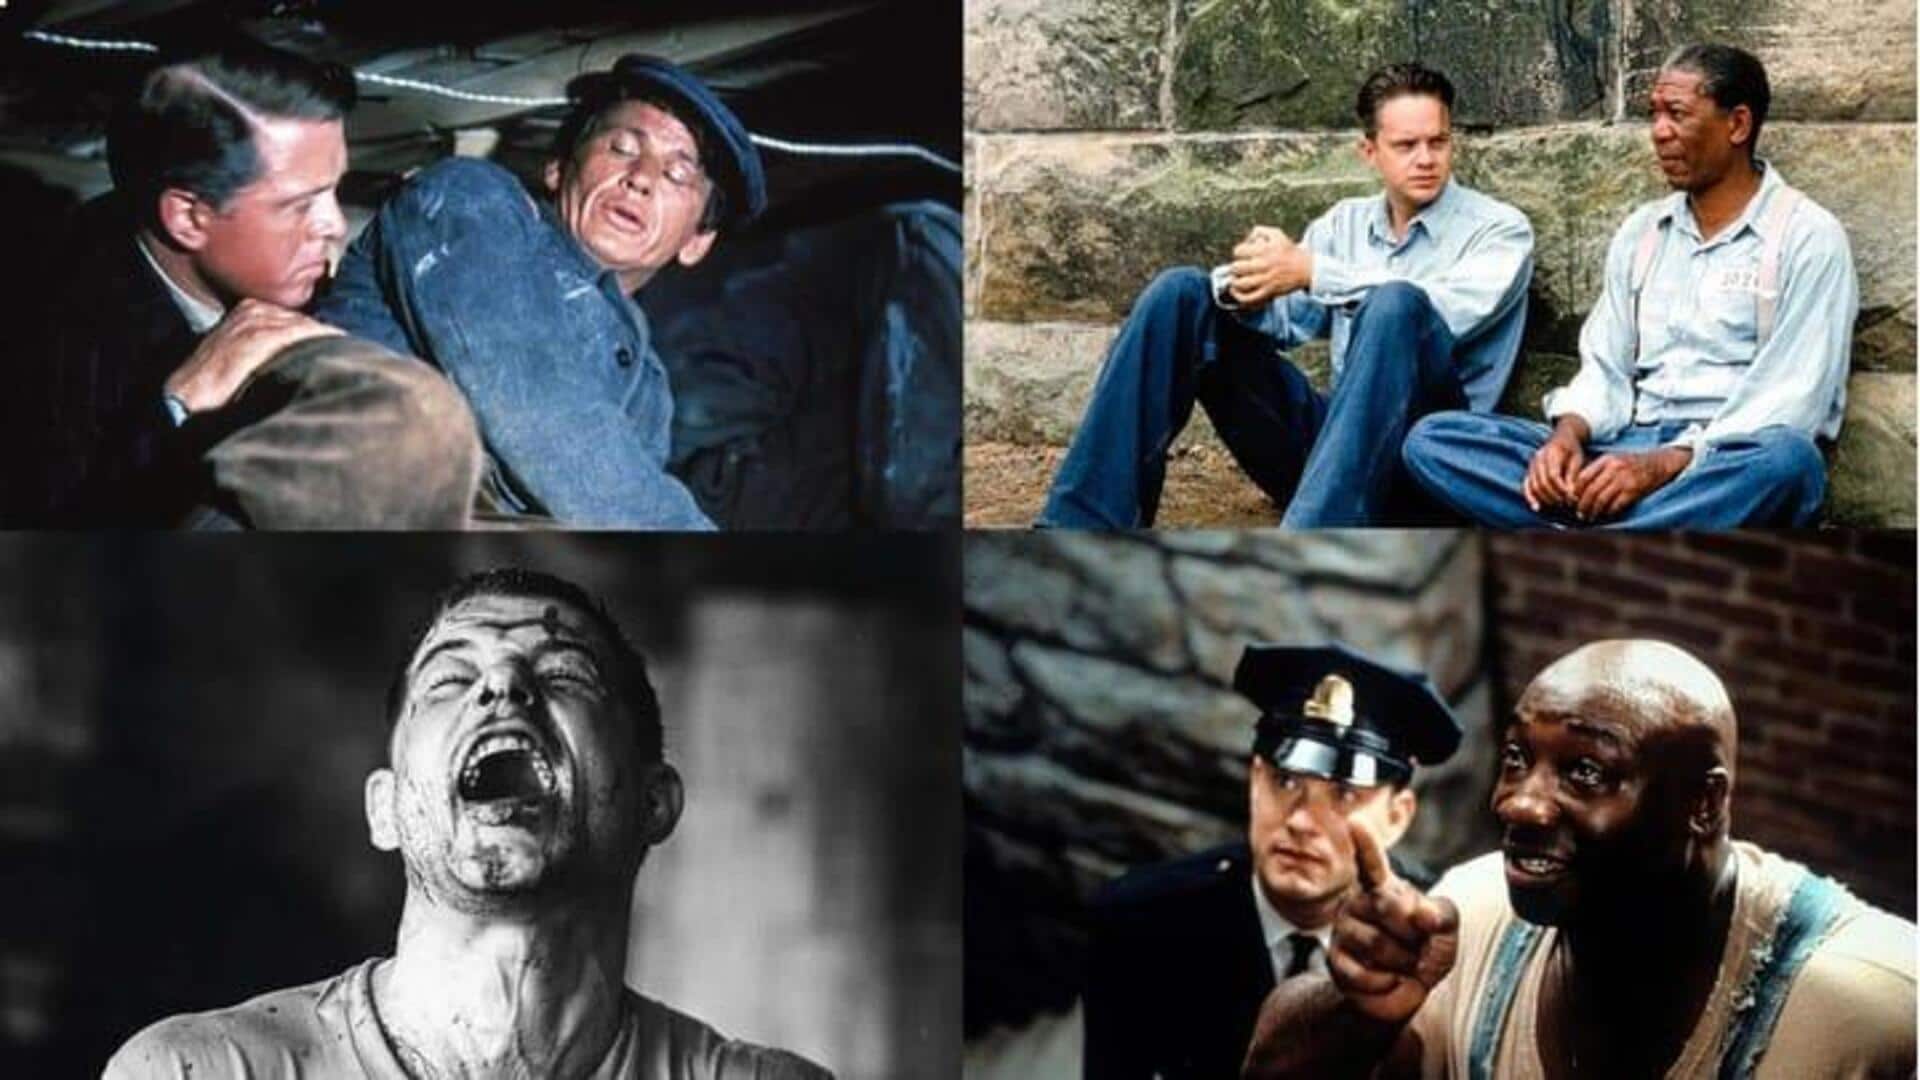 'Shawshank Redemption' hingga 'Great Escape': Film Hollywood terbaik tentang penjara